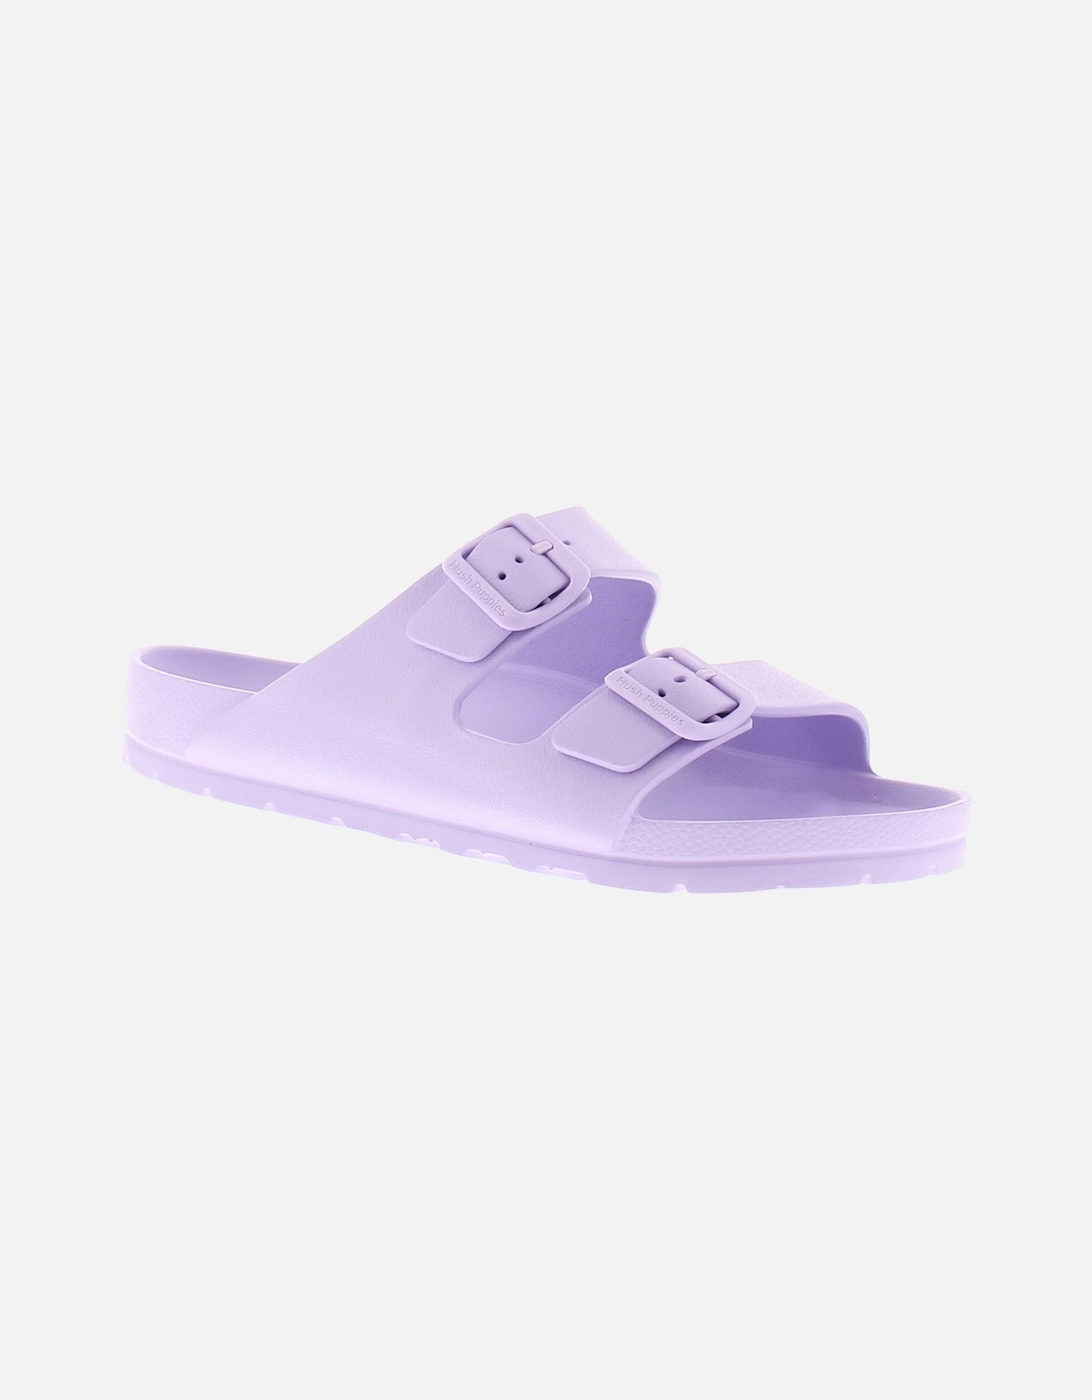 Womens Sandals Flat Lorna Slip On lilac UK Size, 6 of 5